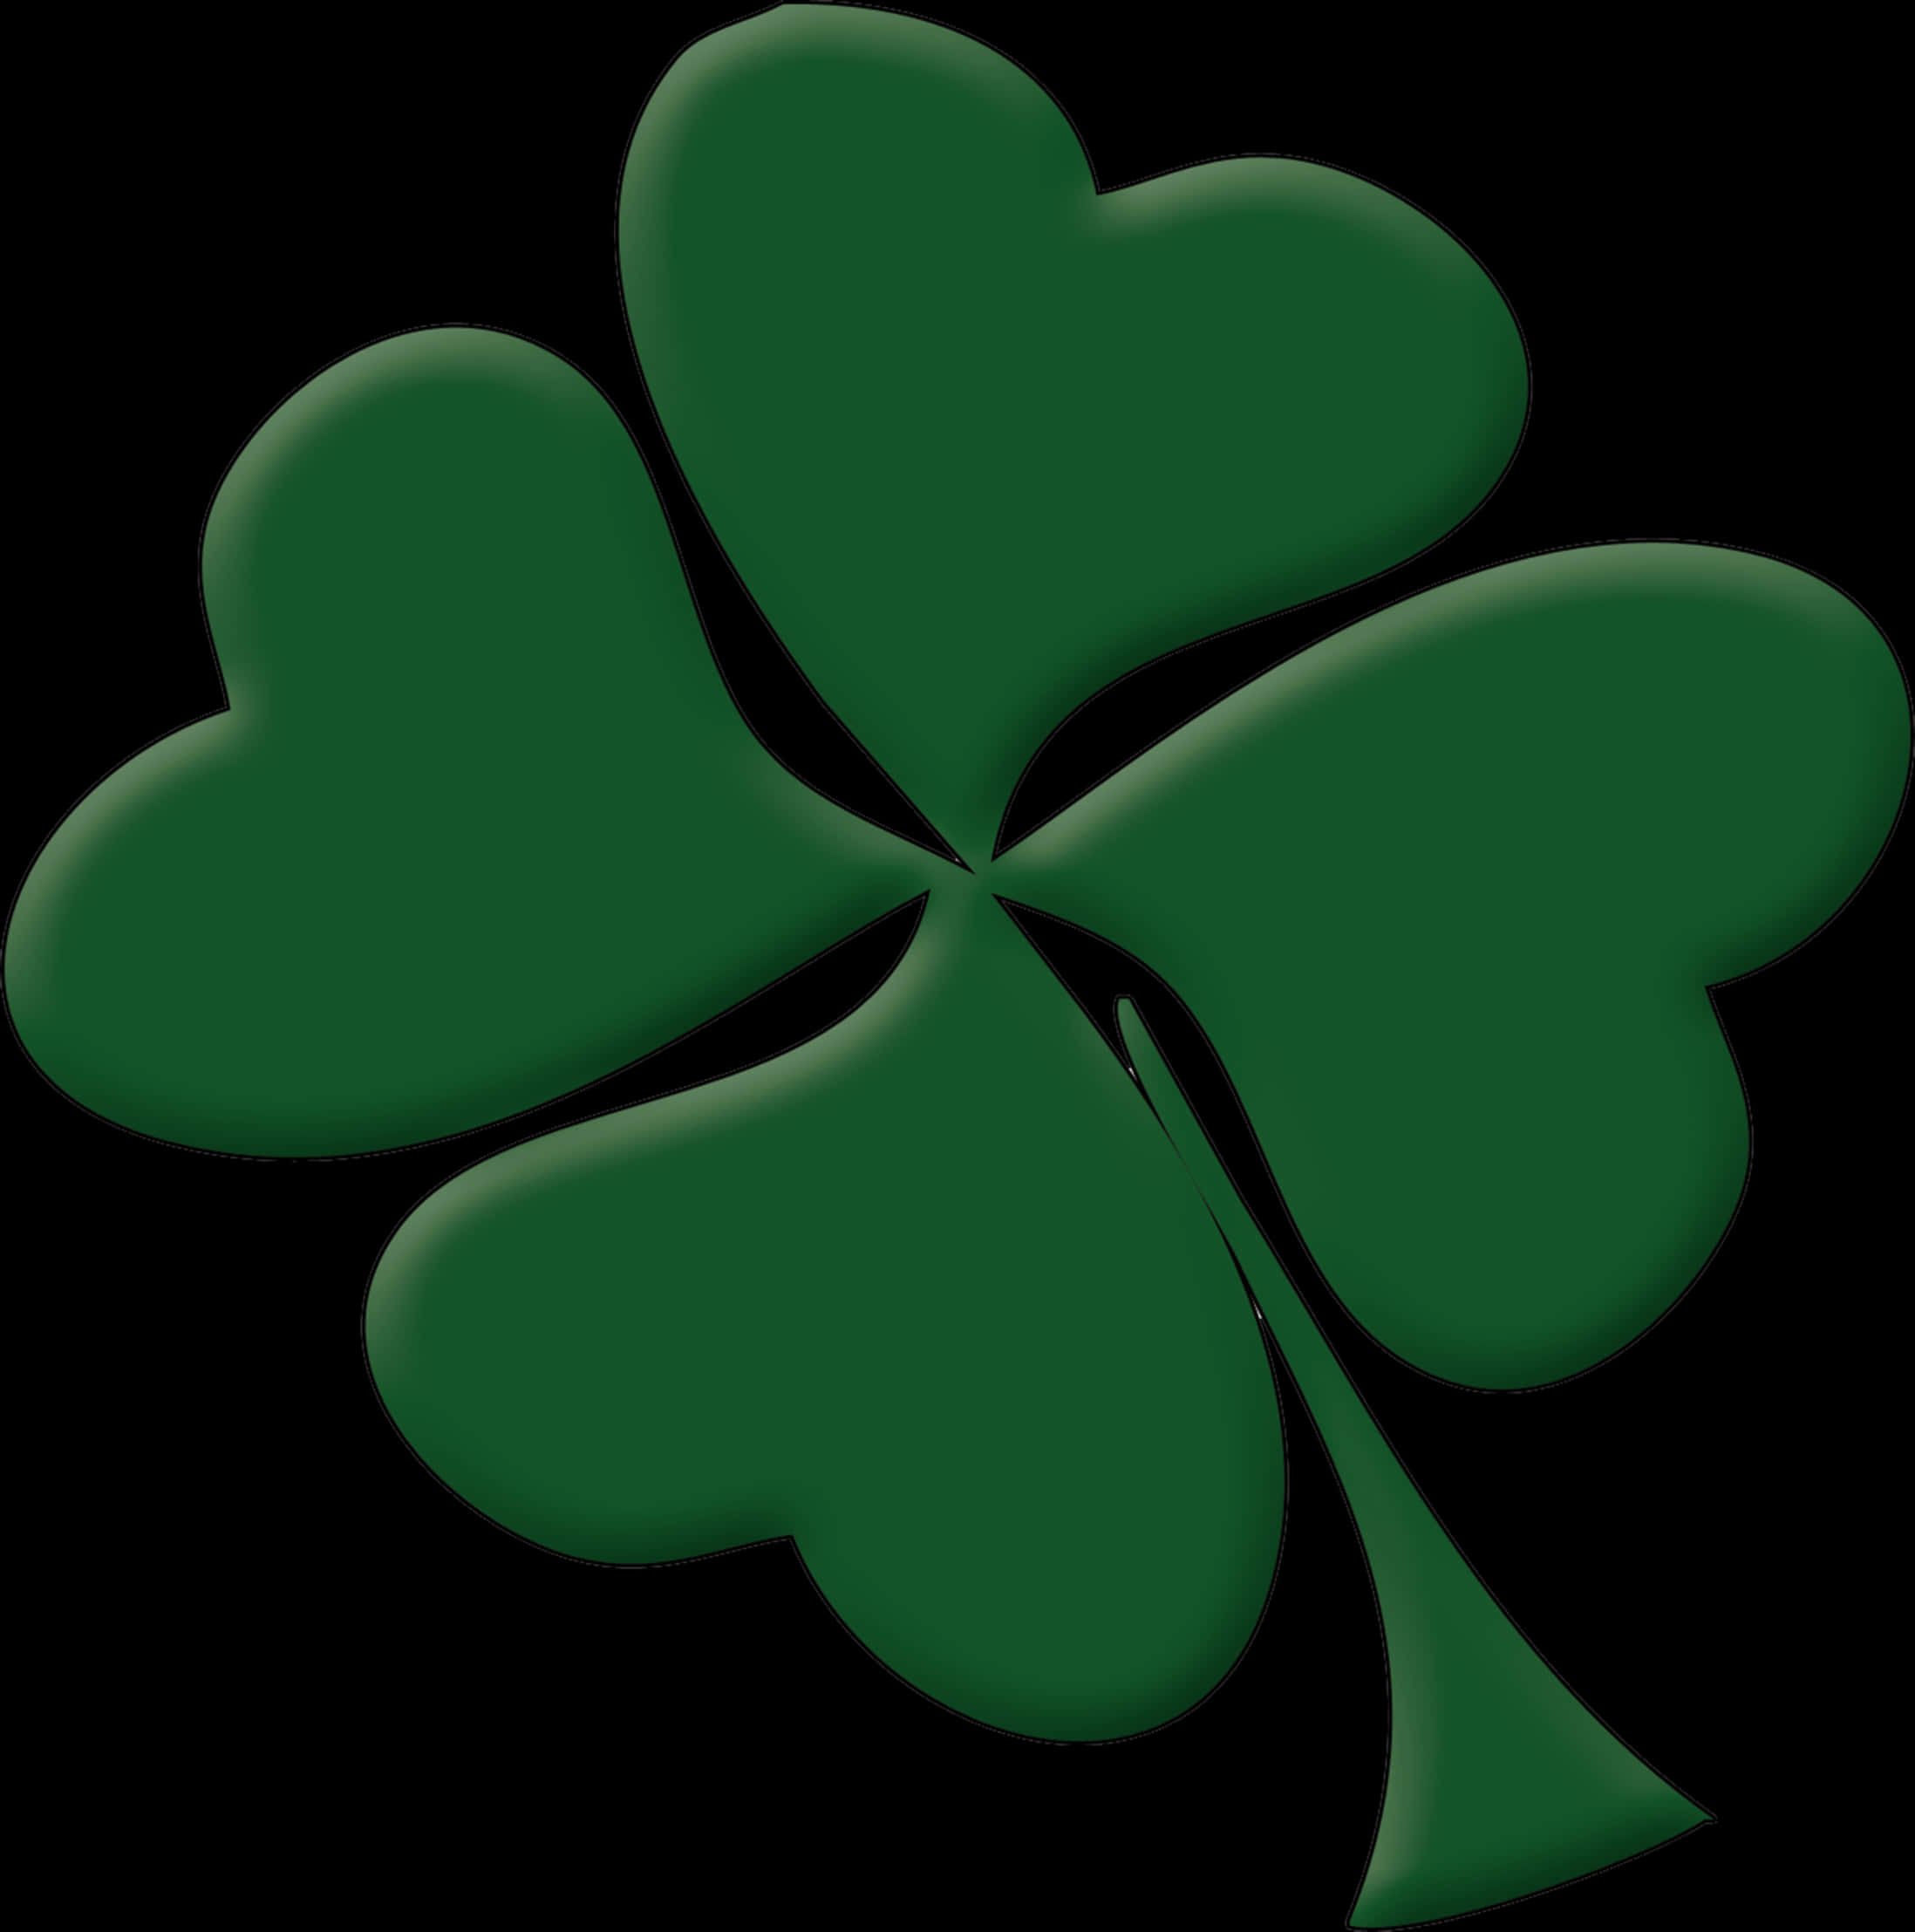 Shamrock Ireland's National Flower - Shamrock Heart, Hd Png Download